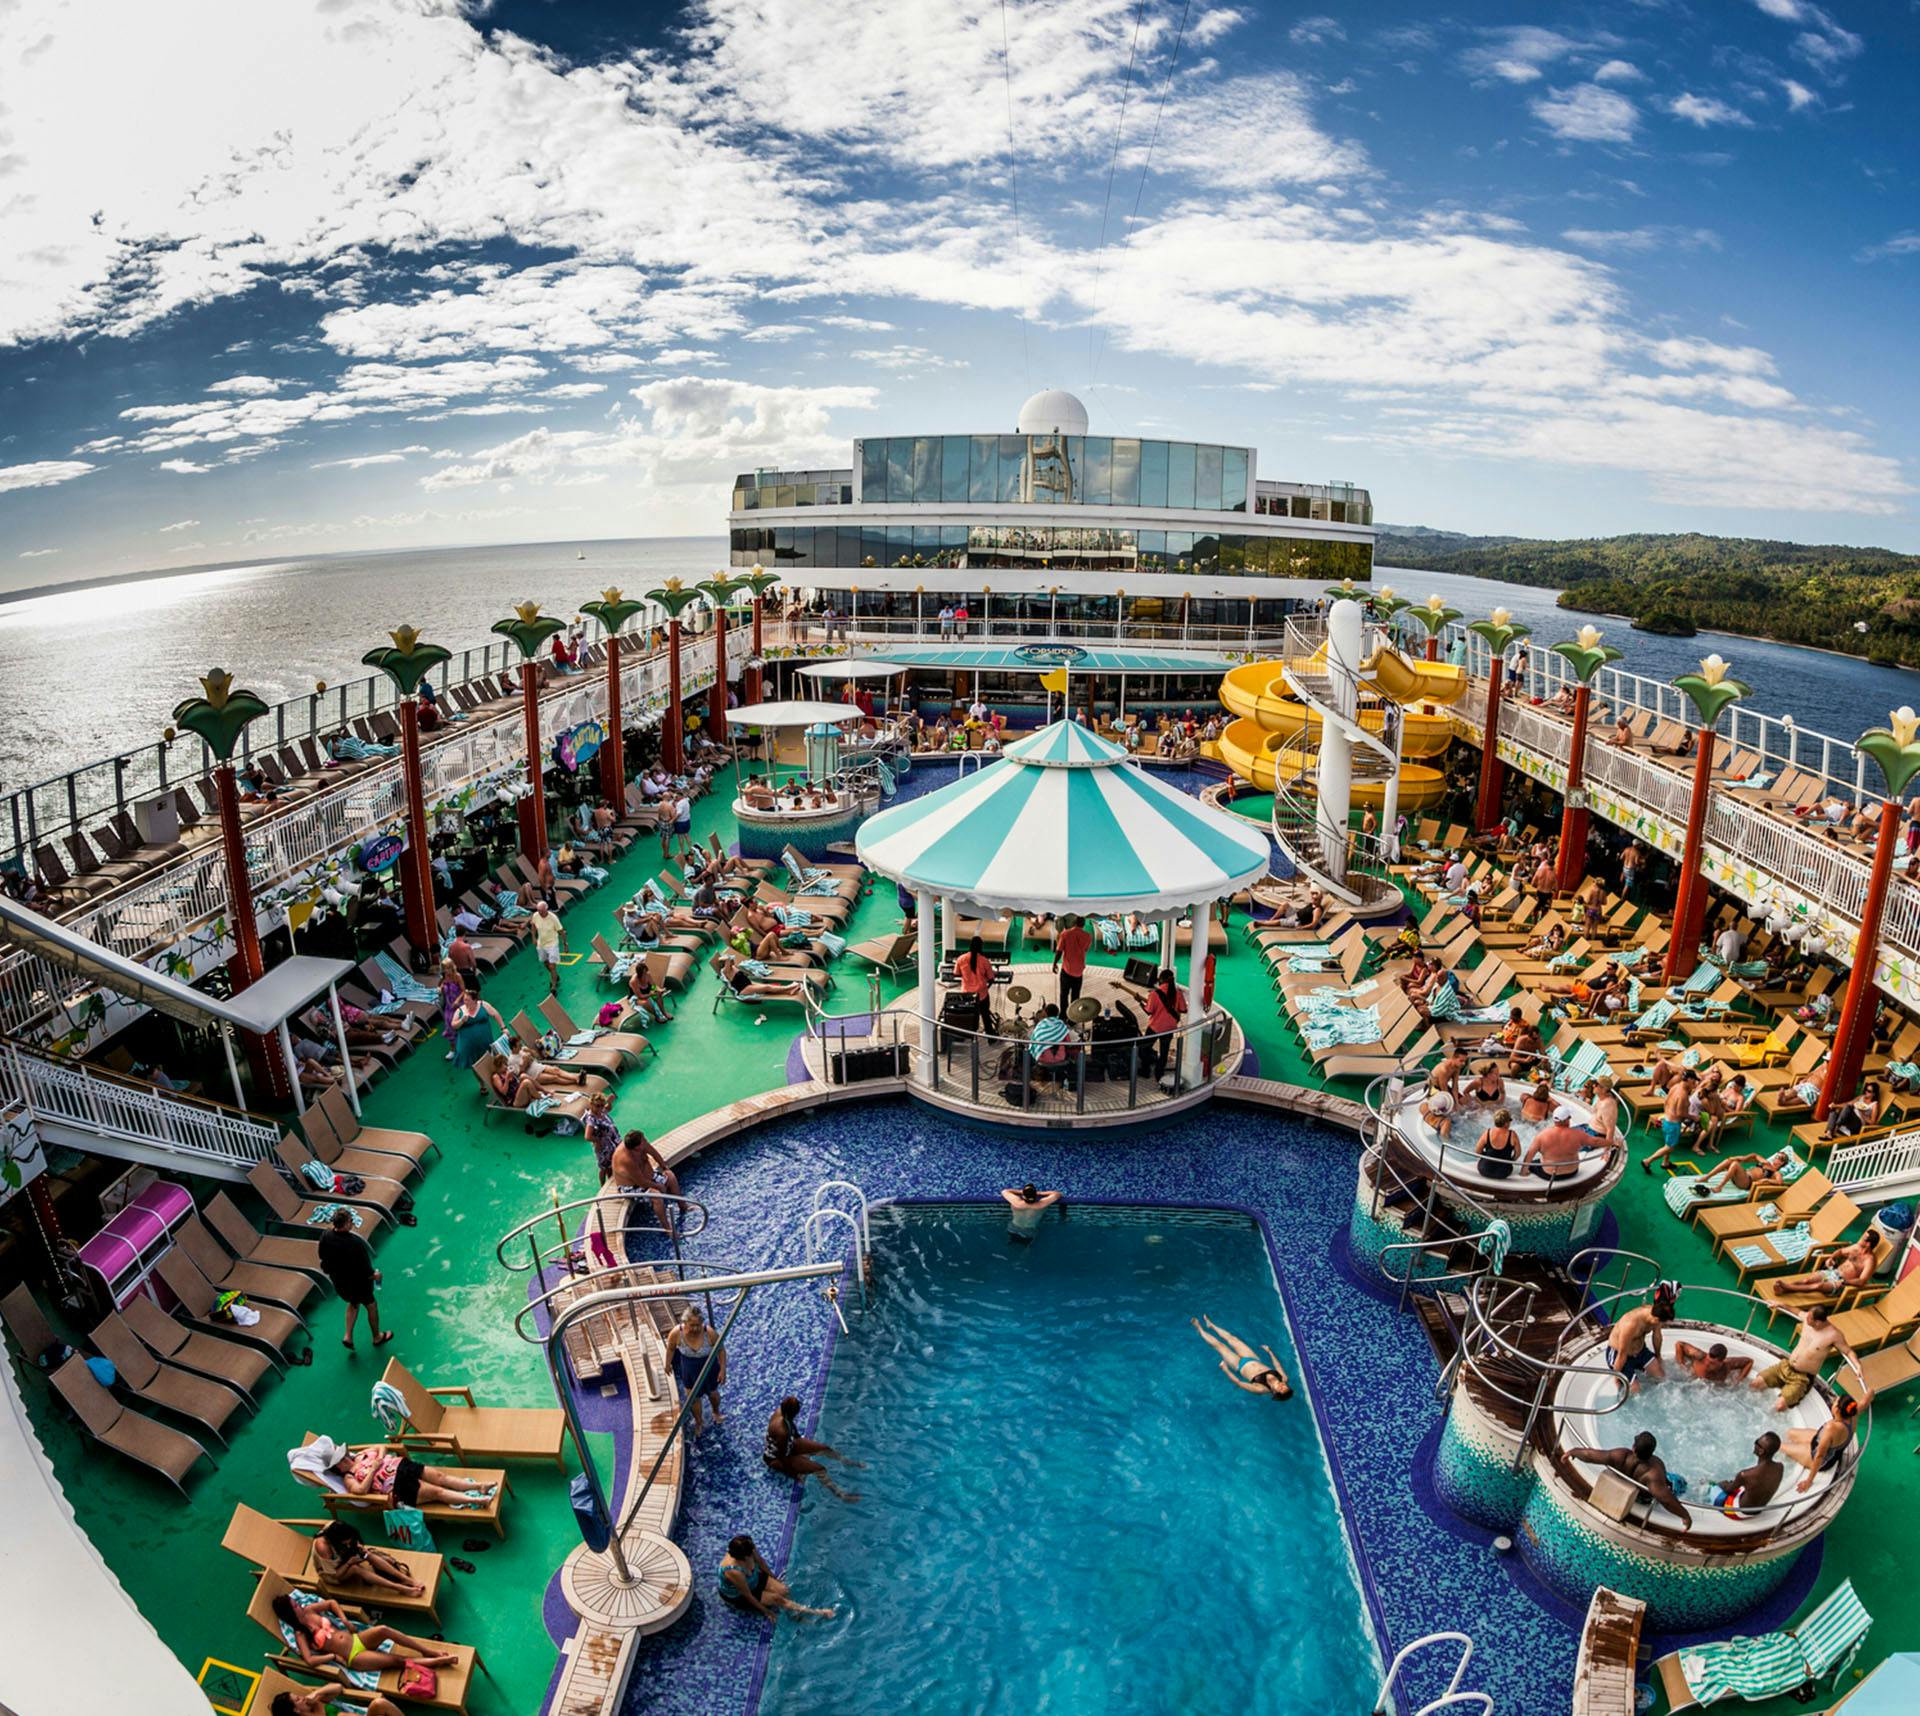 Pool on a cruise ship